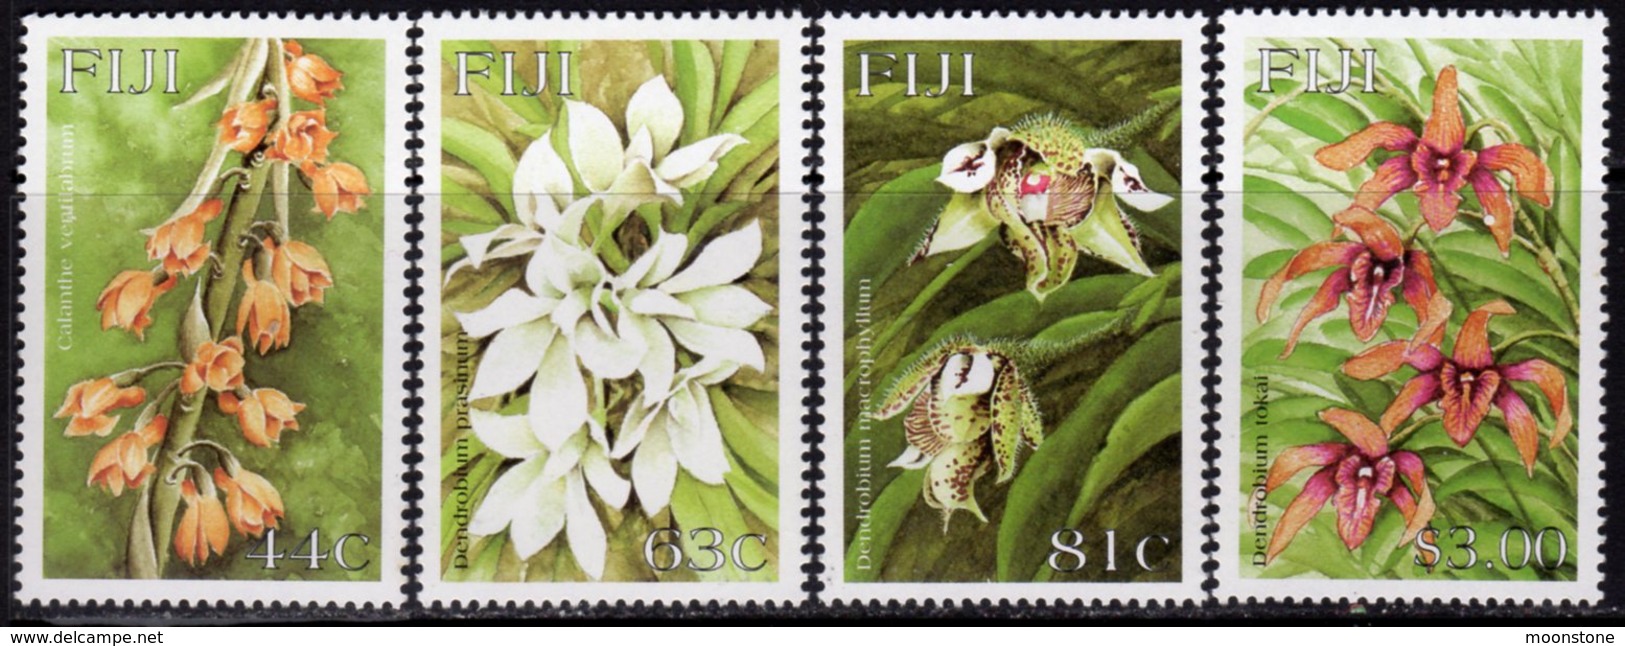 Fiji 1999 Orchids Flowers Set Of 4, MNH, SG 1050/3 (BP2) - Fiji (1970-...)